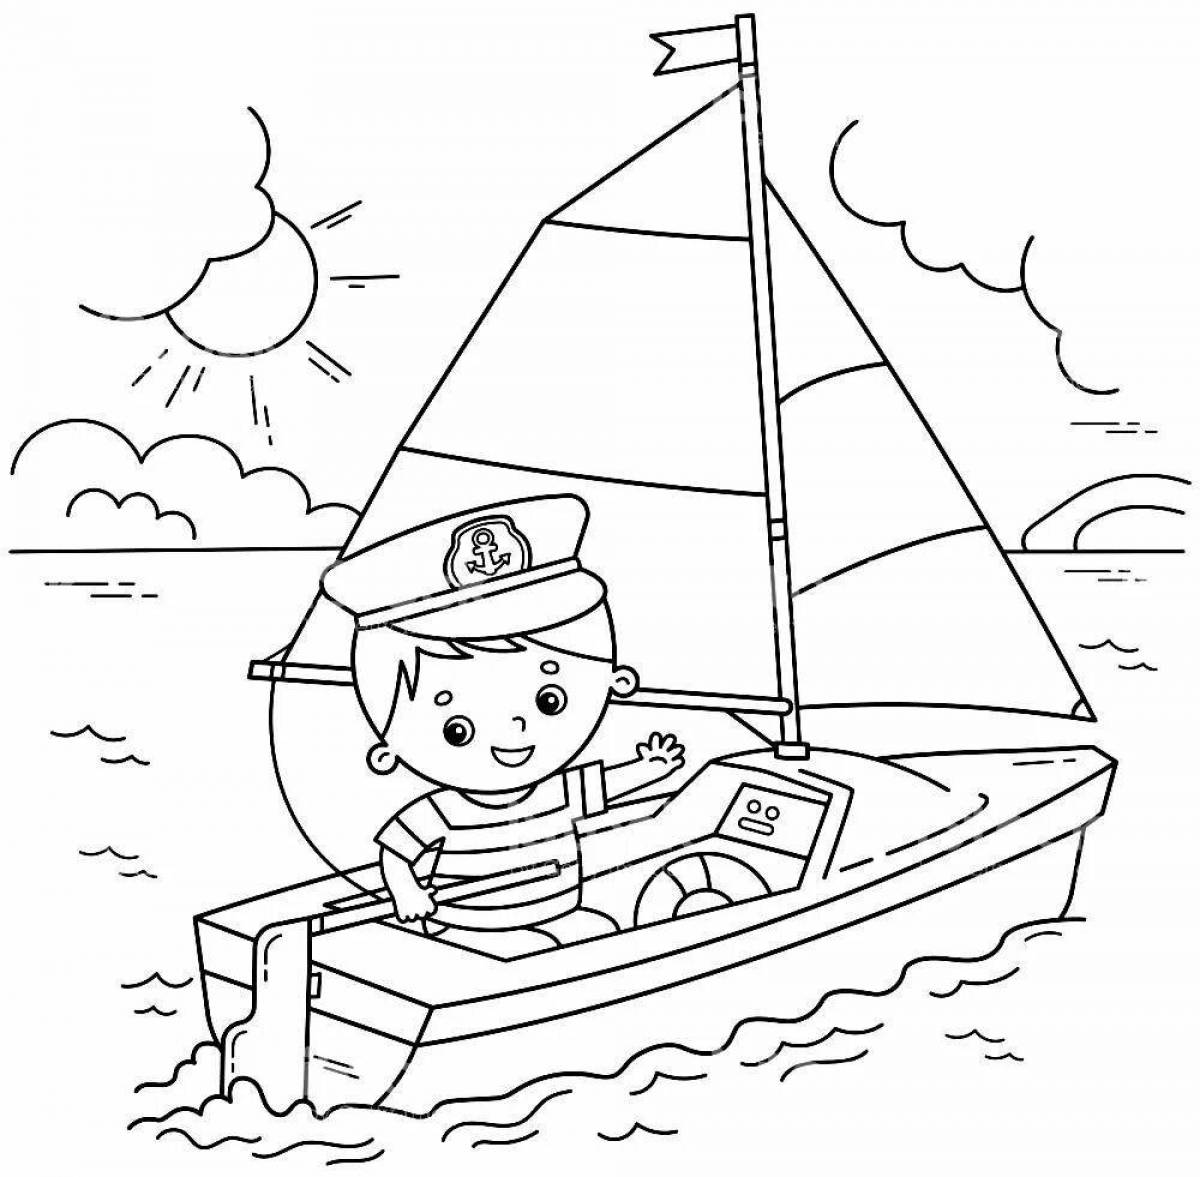 Colorful-sailor-illustration sailor-coloring for children